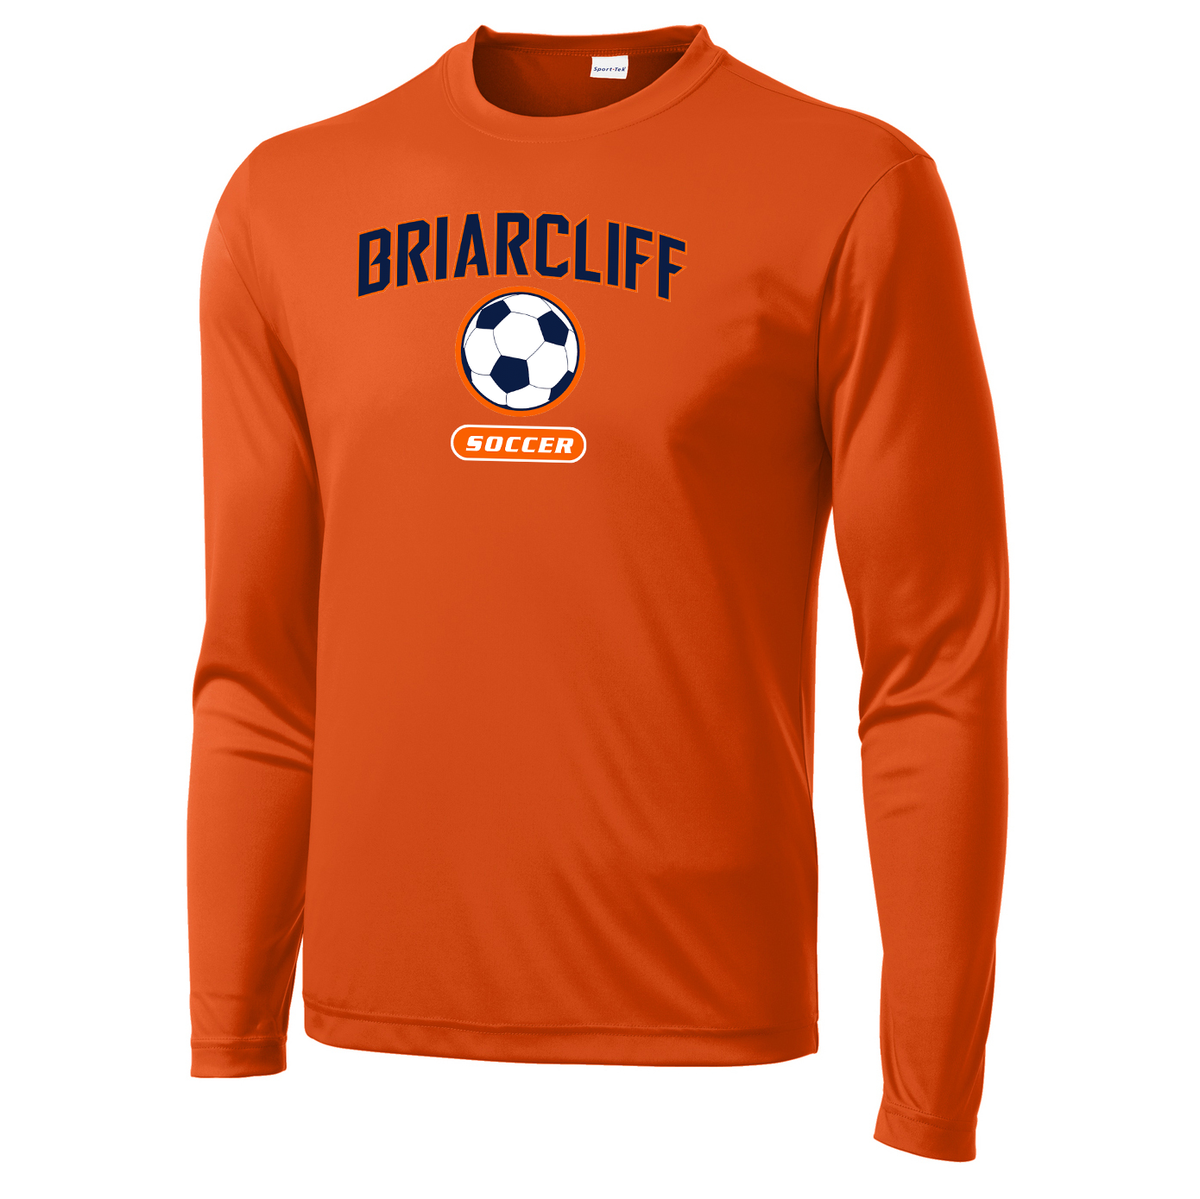 Briarcliff Soccer Long Sleeve Performance Shirt